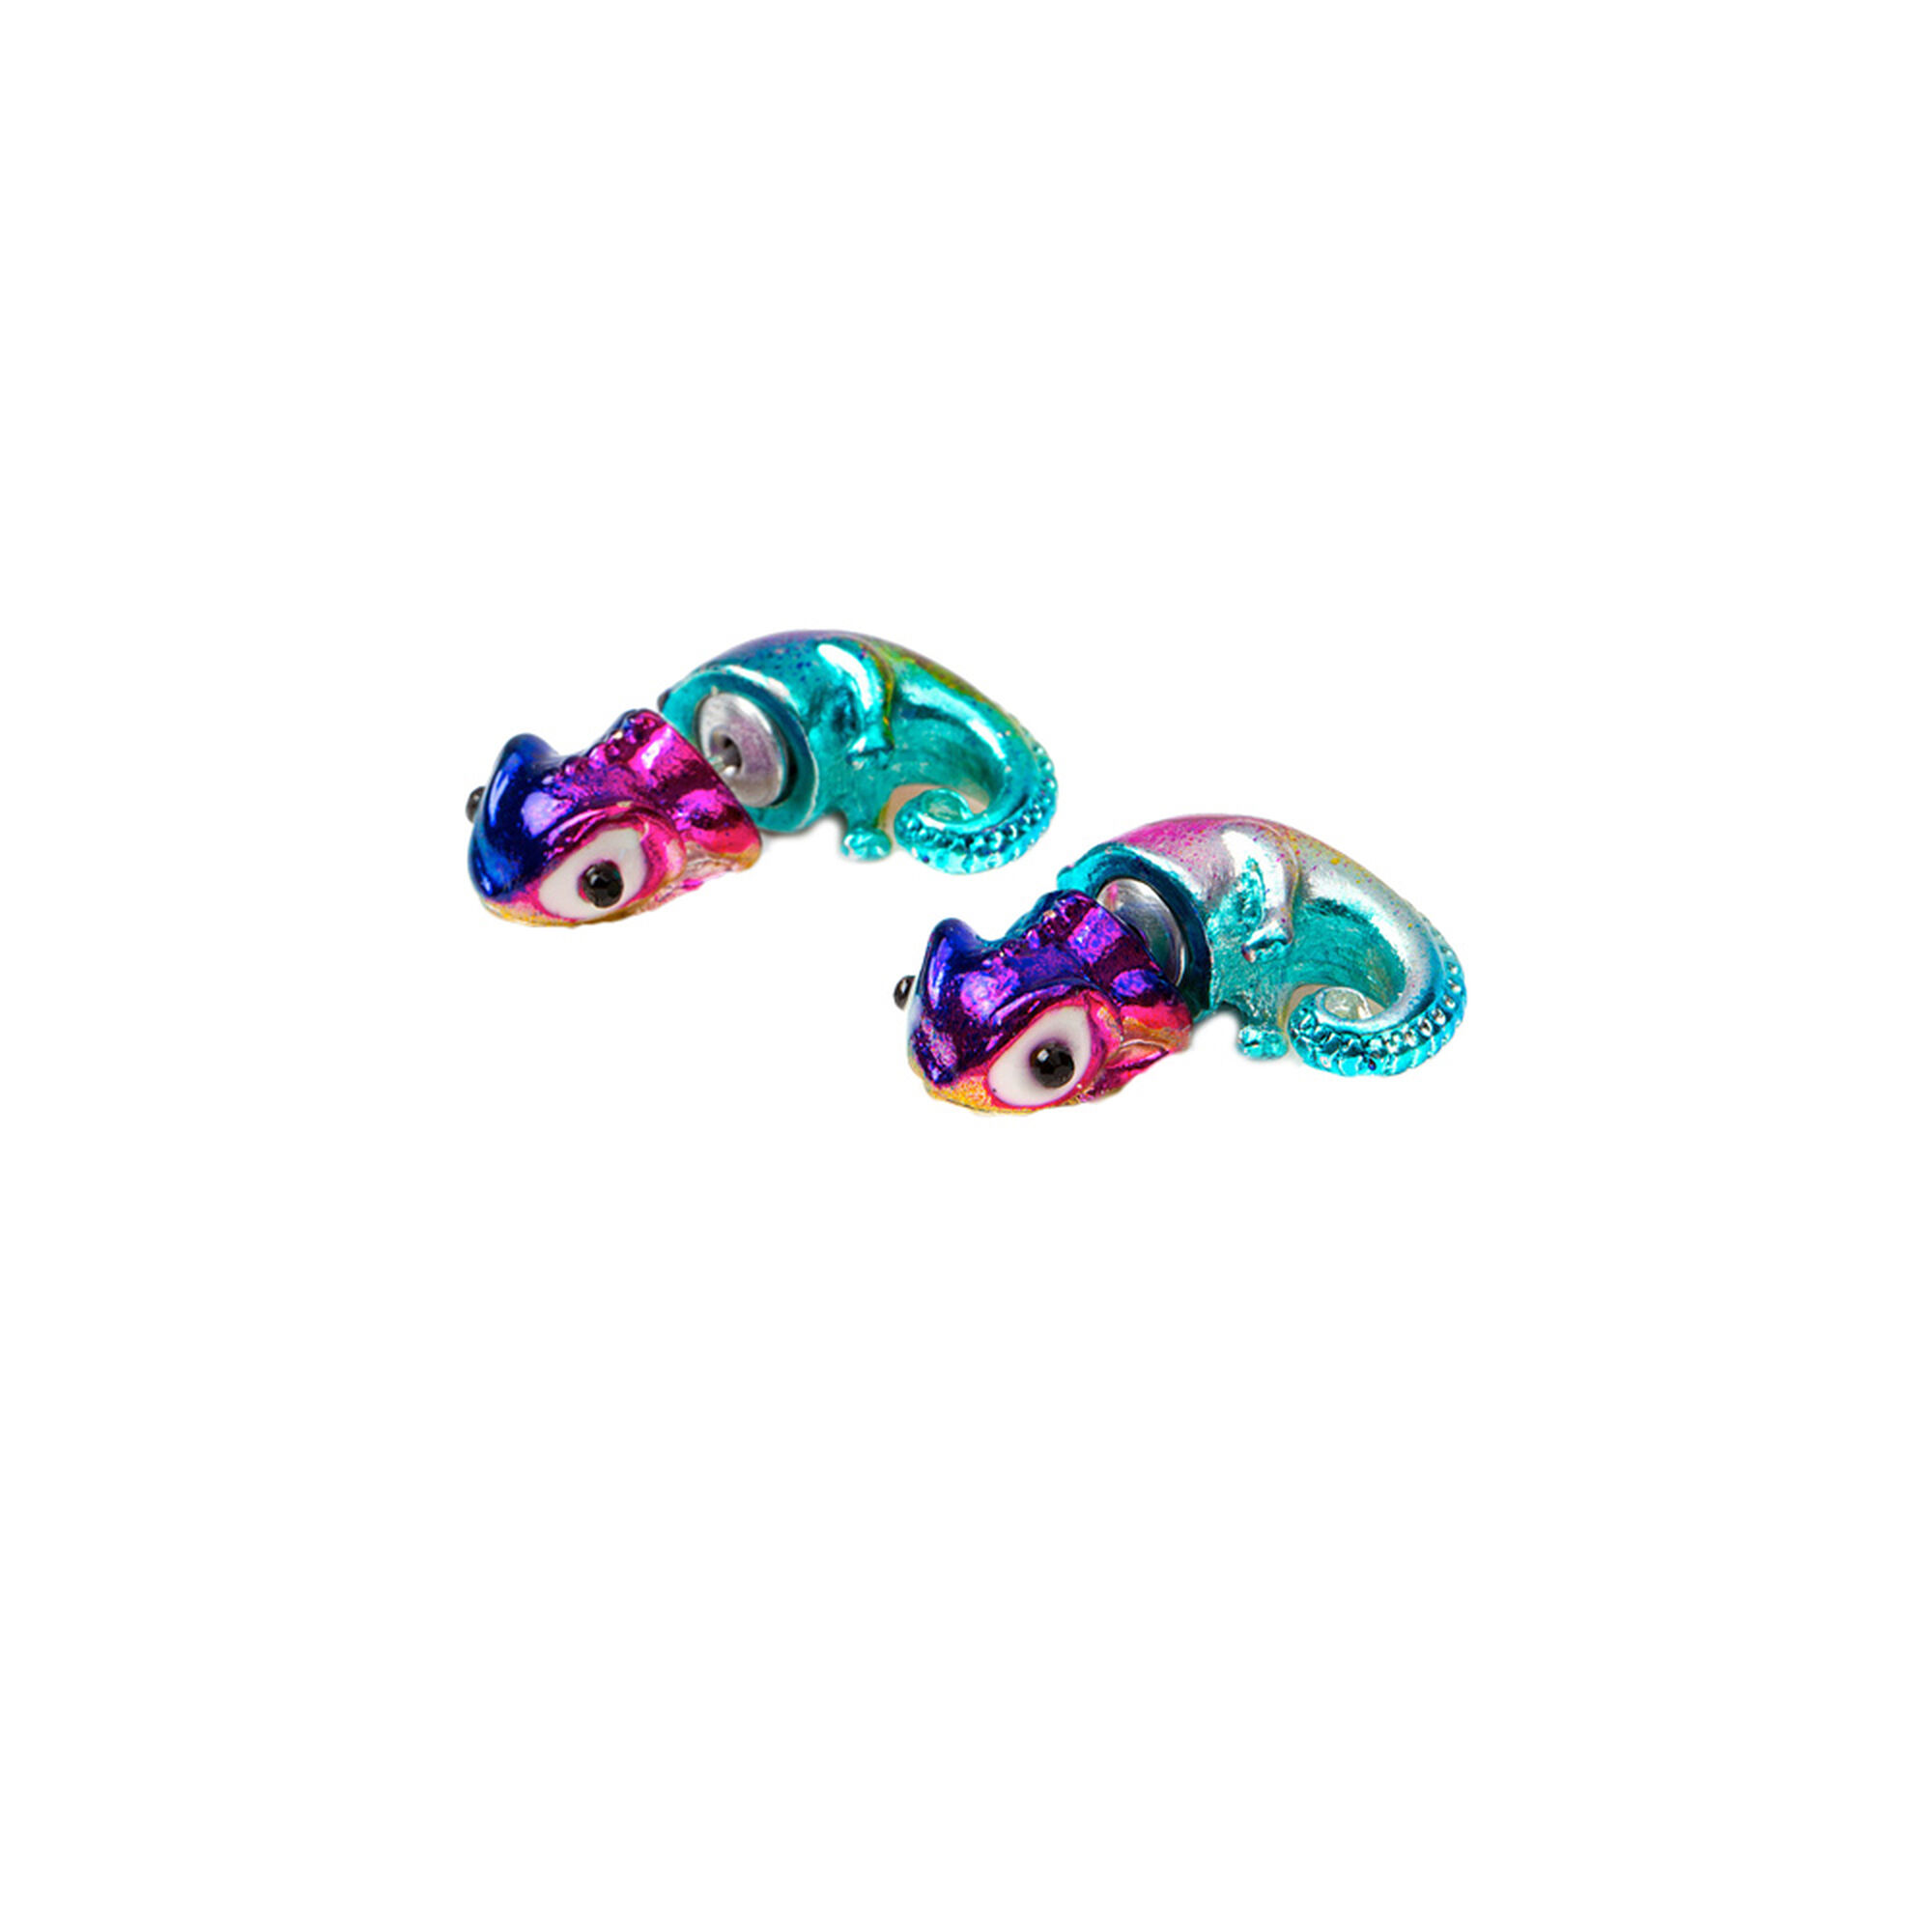 View Claires Metallic Chameleon Ear Jacket Earrings Rainbow information